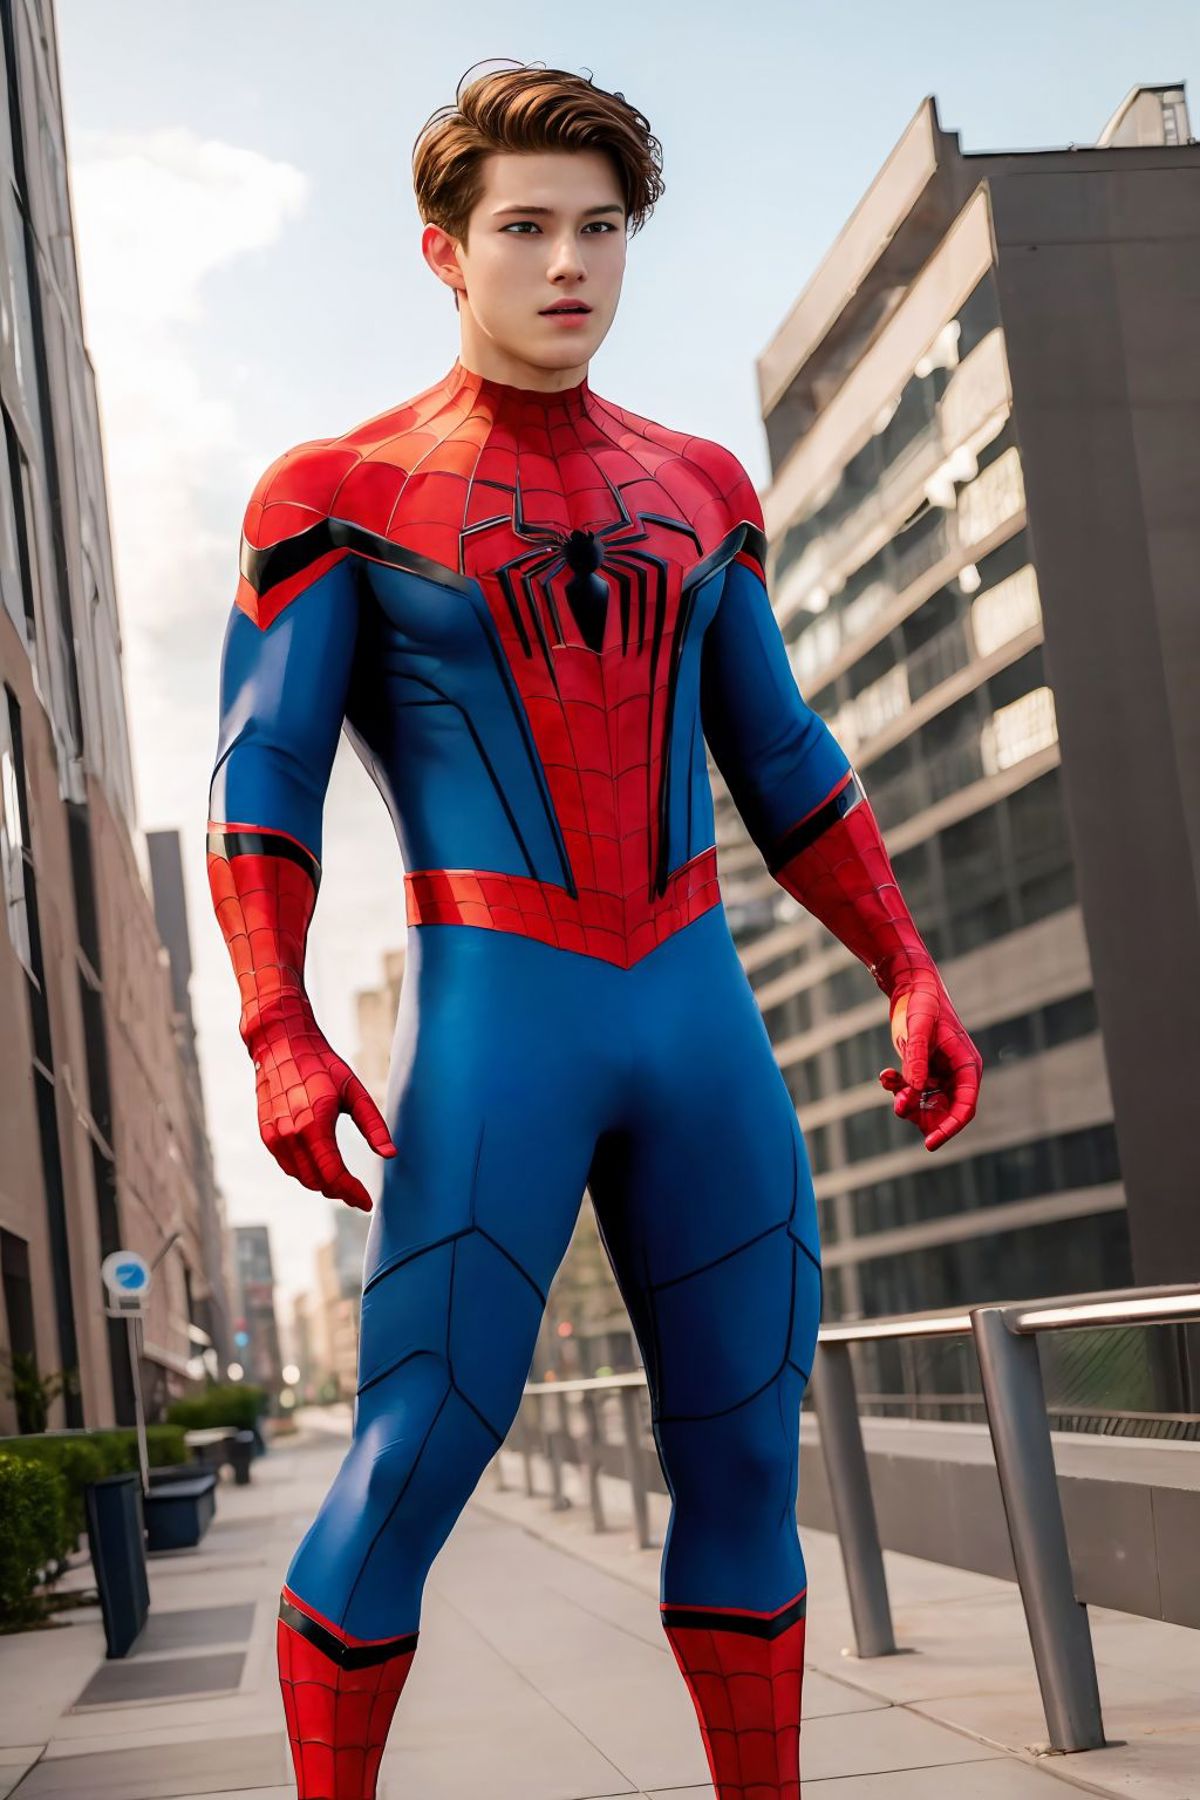 Spider-Man Costume image by Montitto